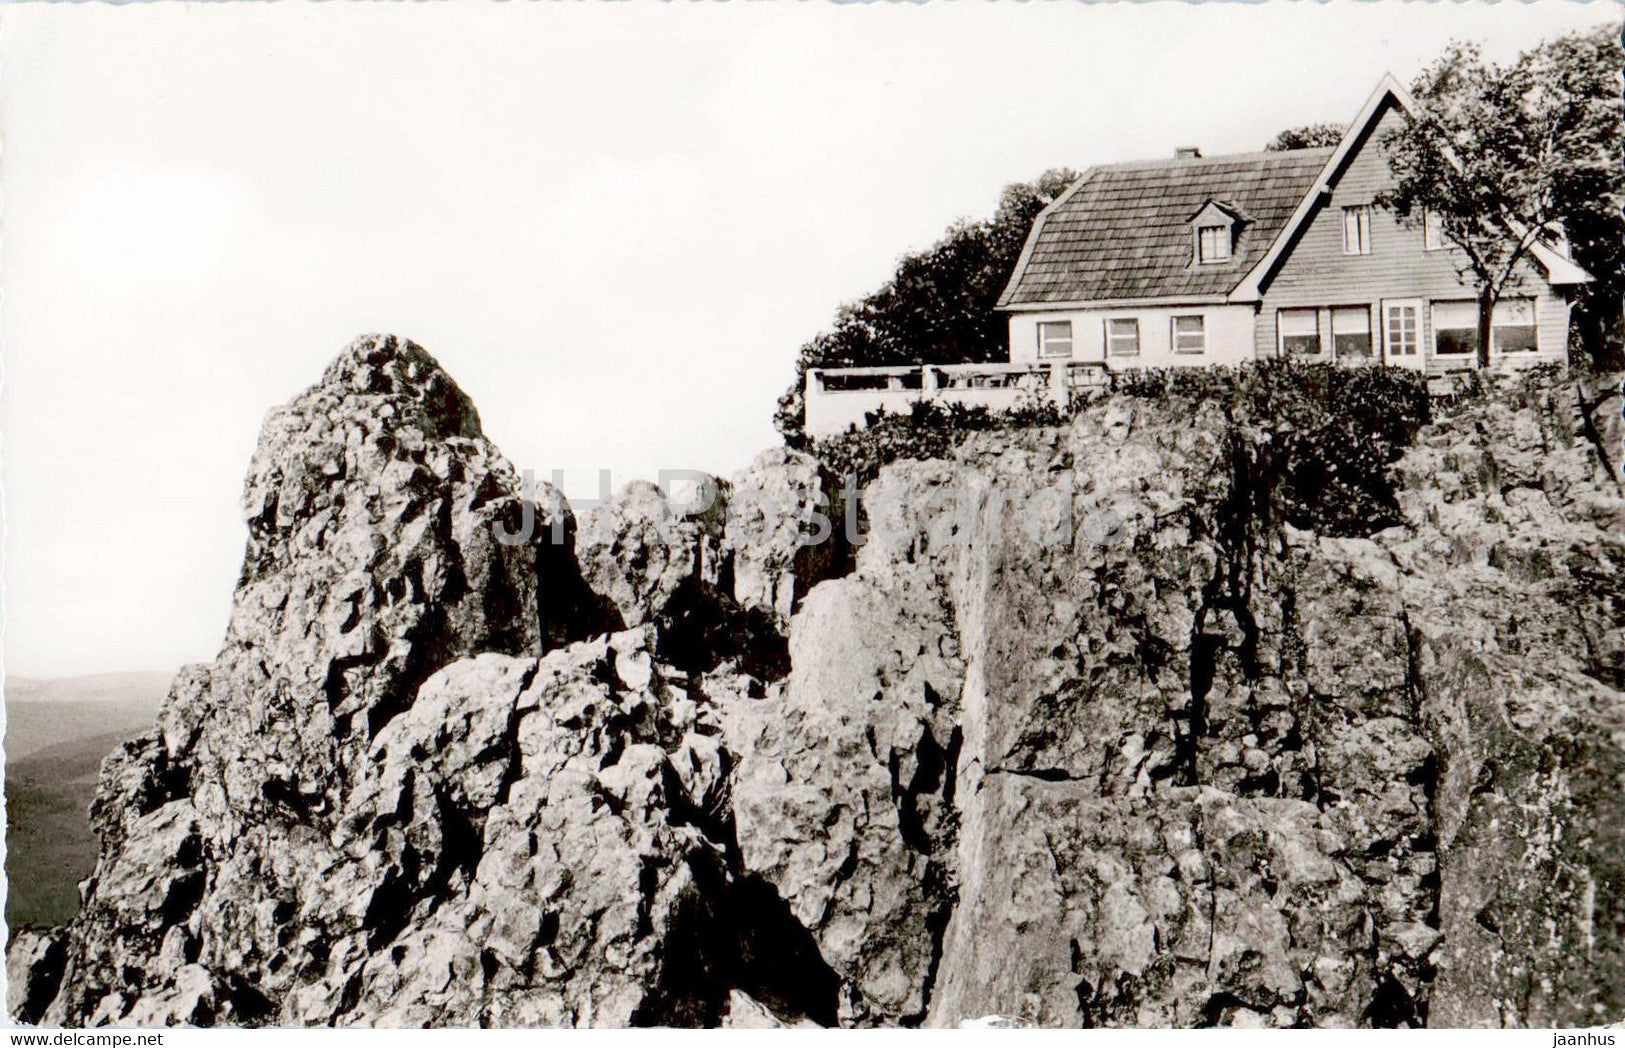 Olberg - Siebengebirge - Berggasthaus - old postcard - Germany - unused - JH Postcards